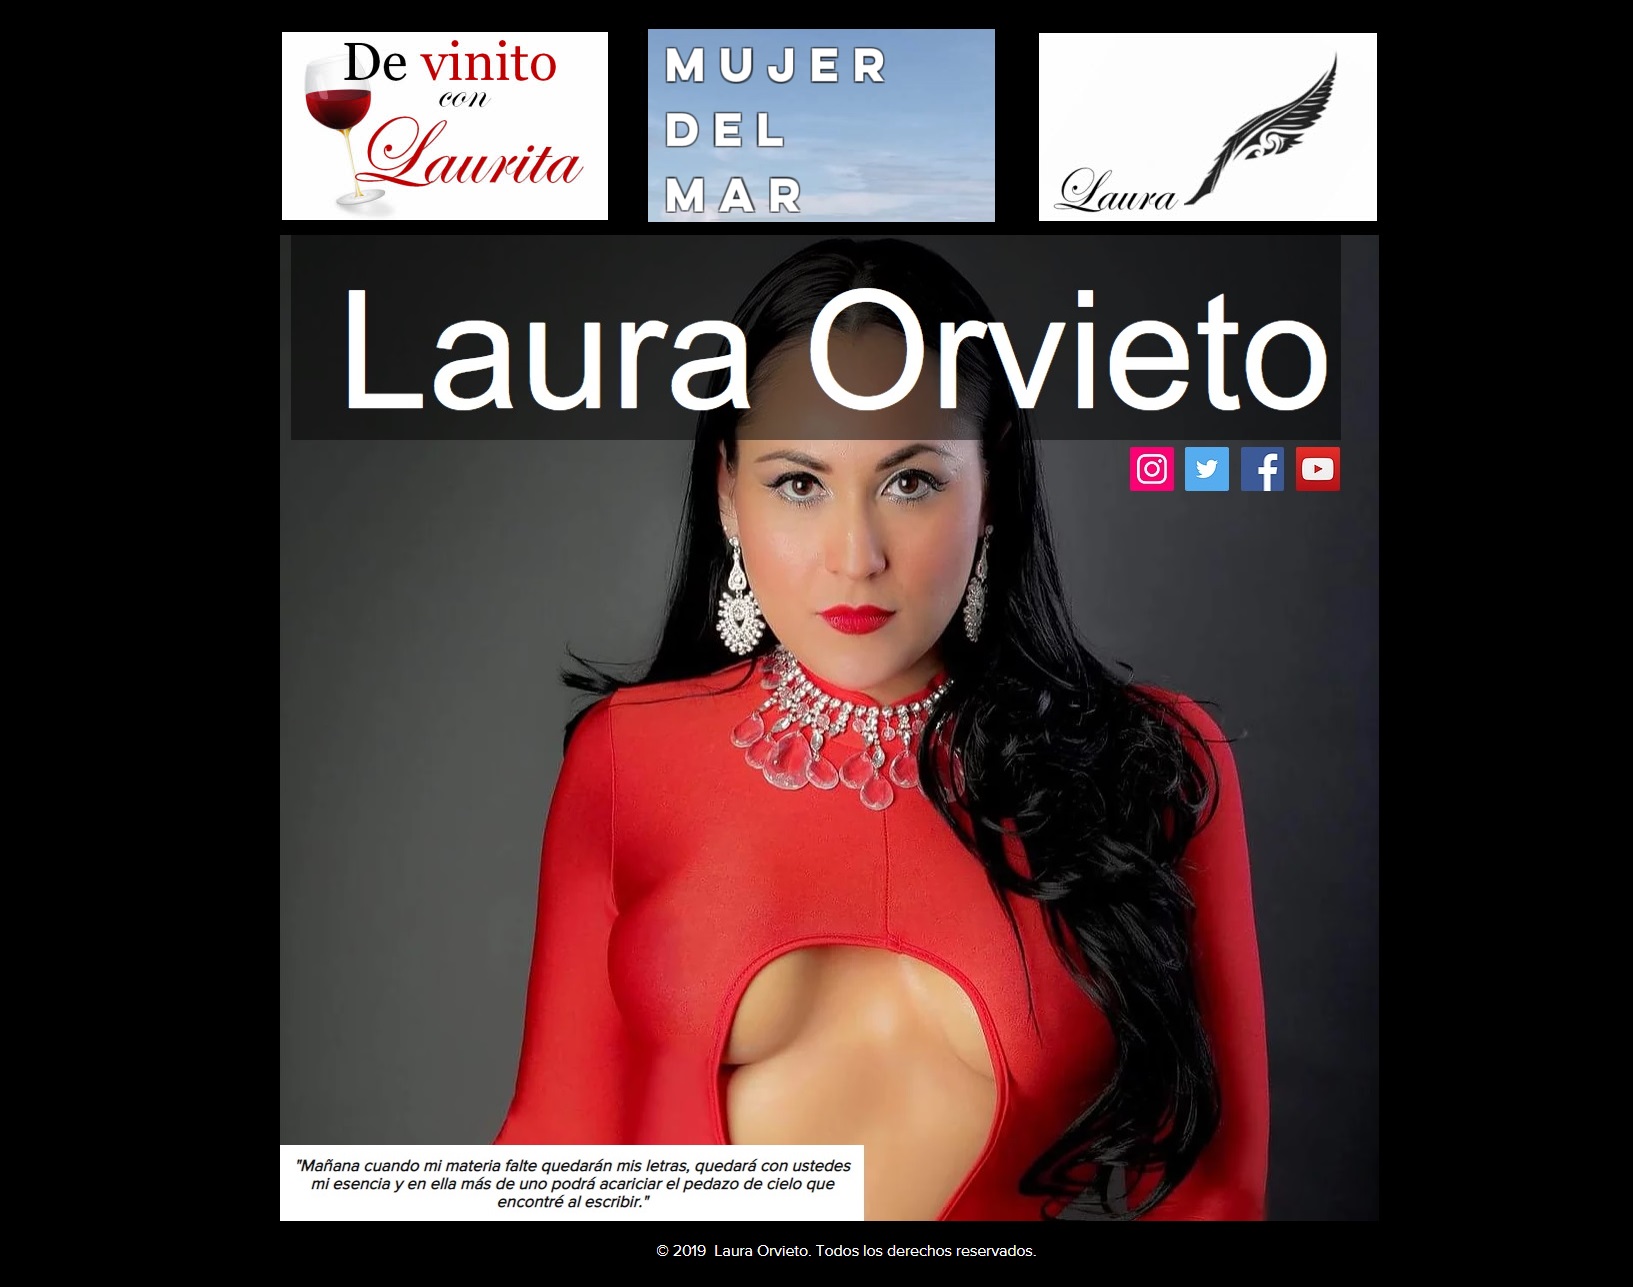 Welcome to the official page of Laura Orvieto / Bienvenido a la página oficial de Laura Orvieto